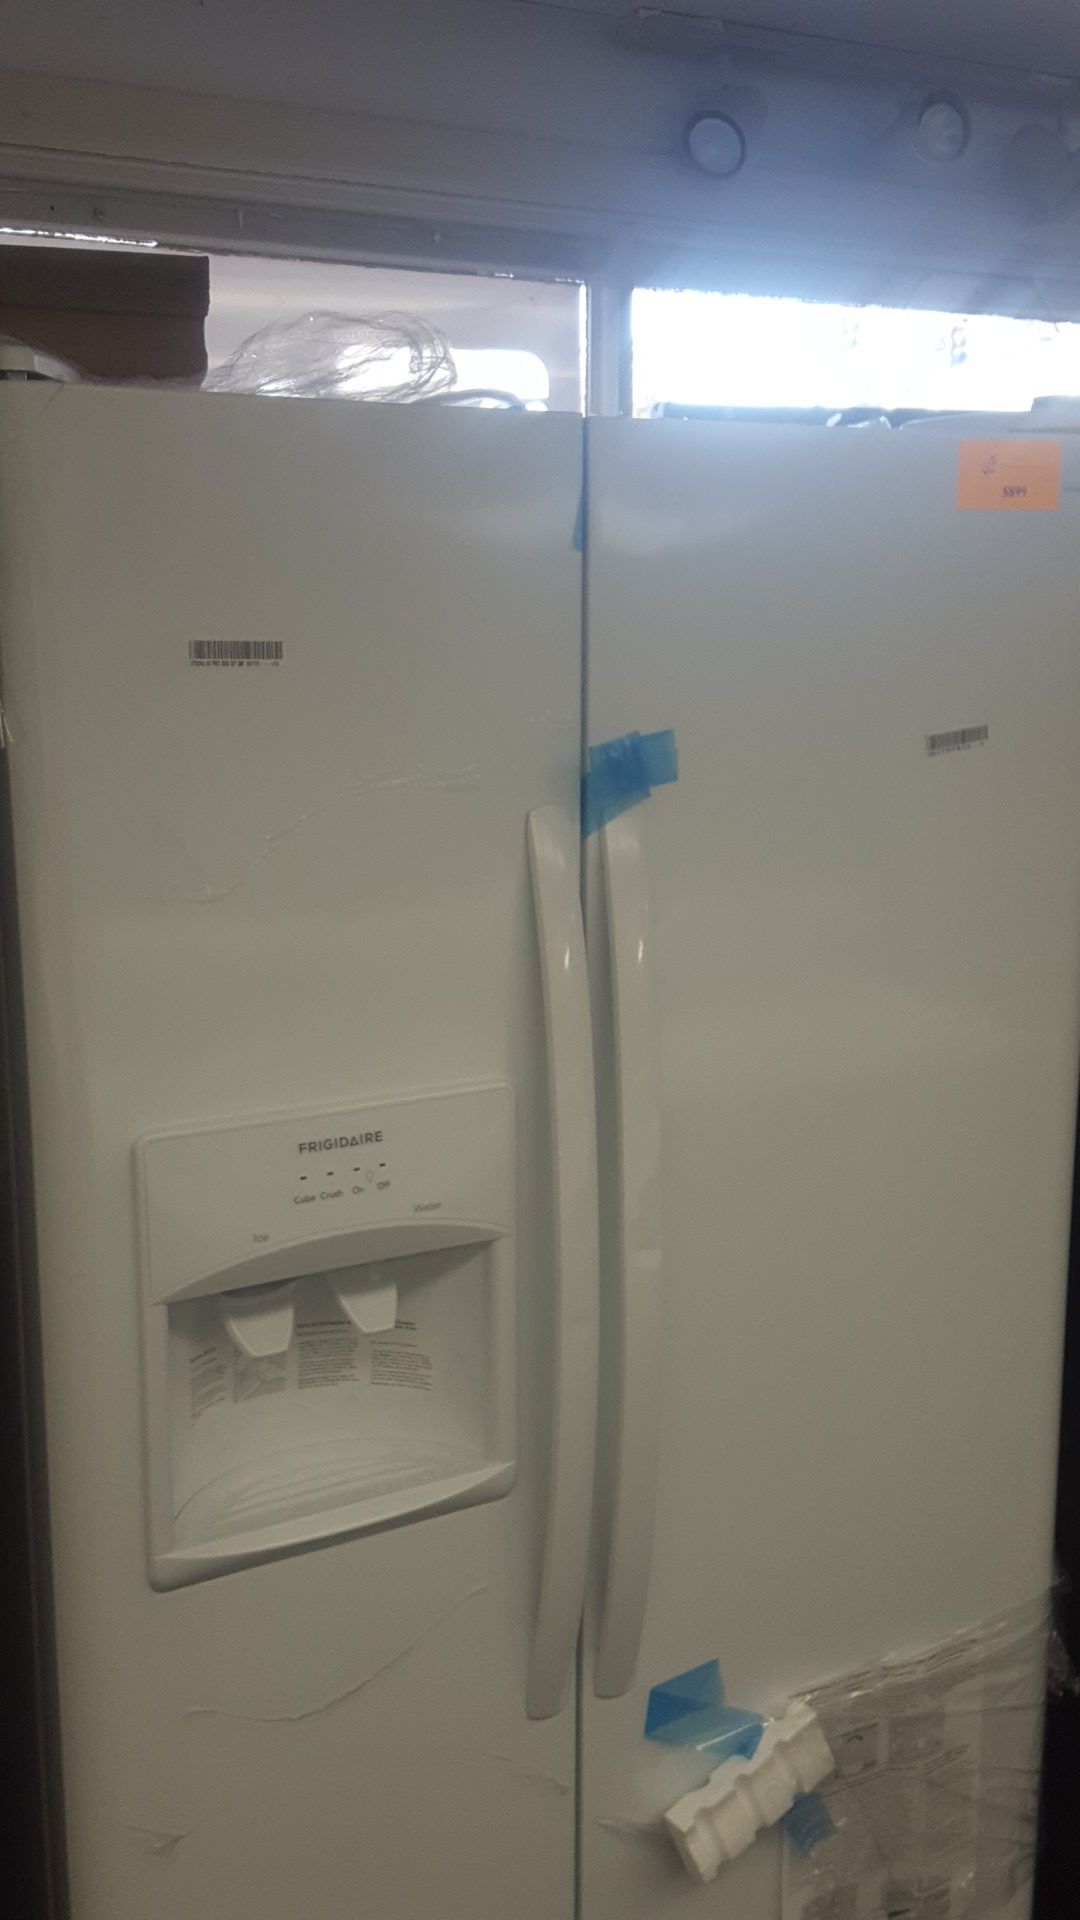 Frigidaire side by side white refrigerator